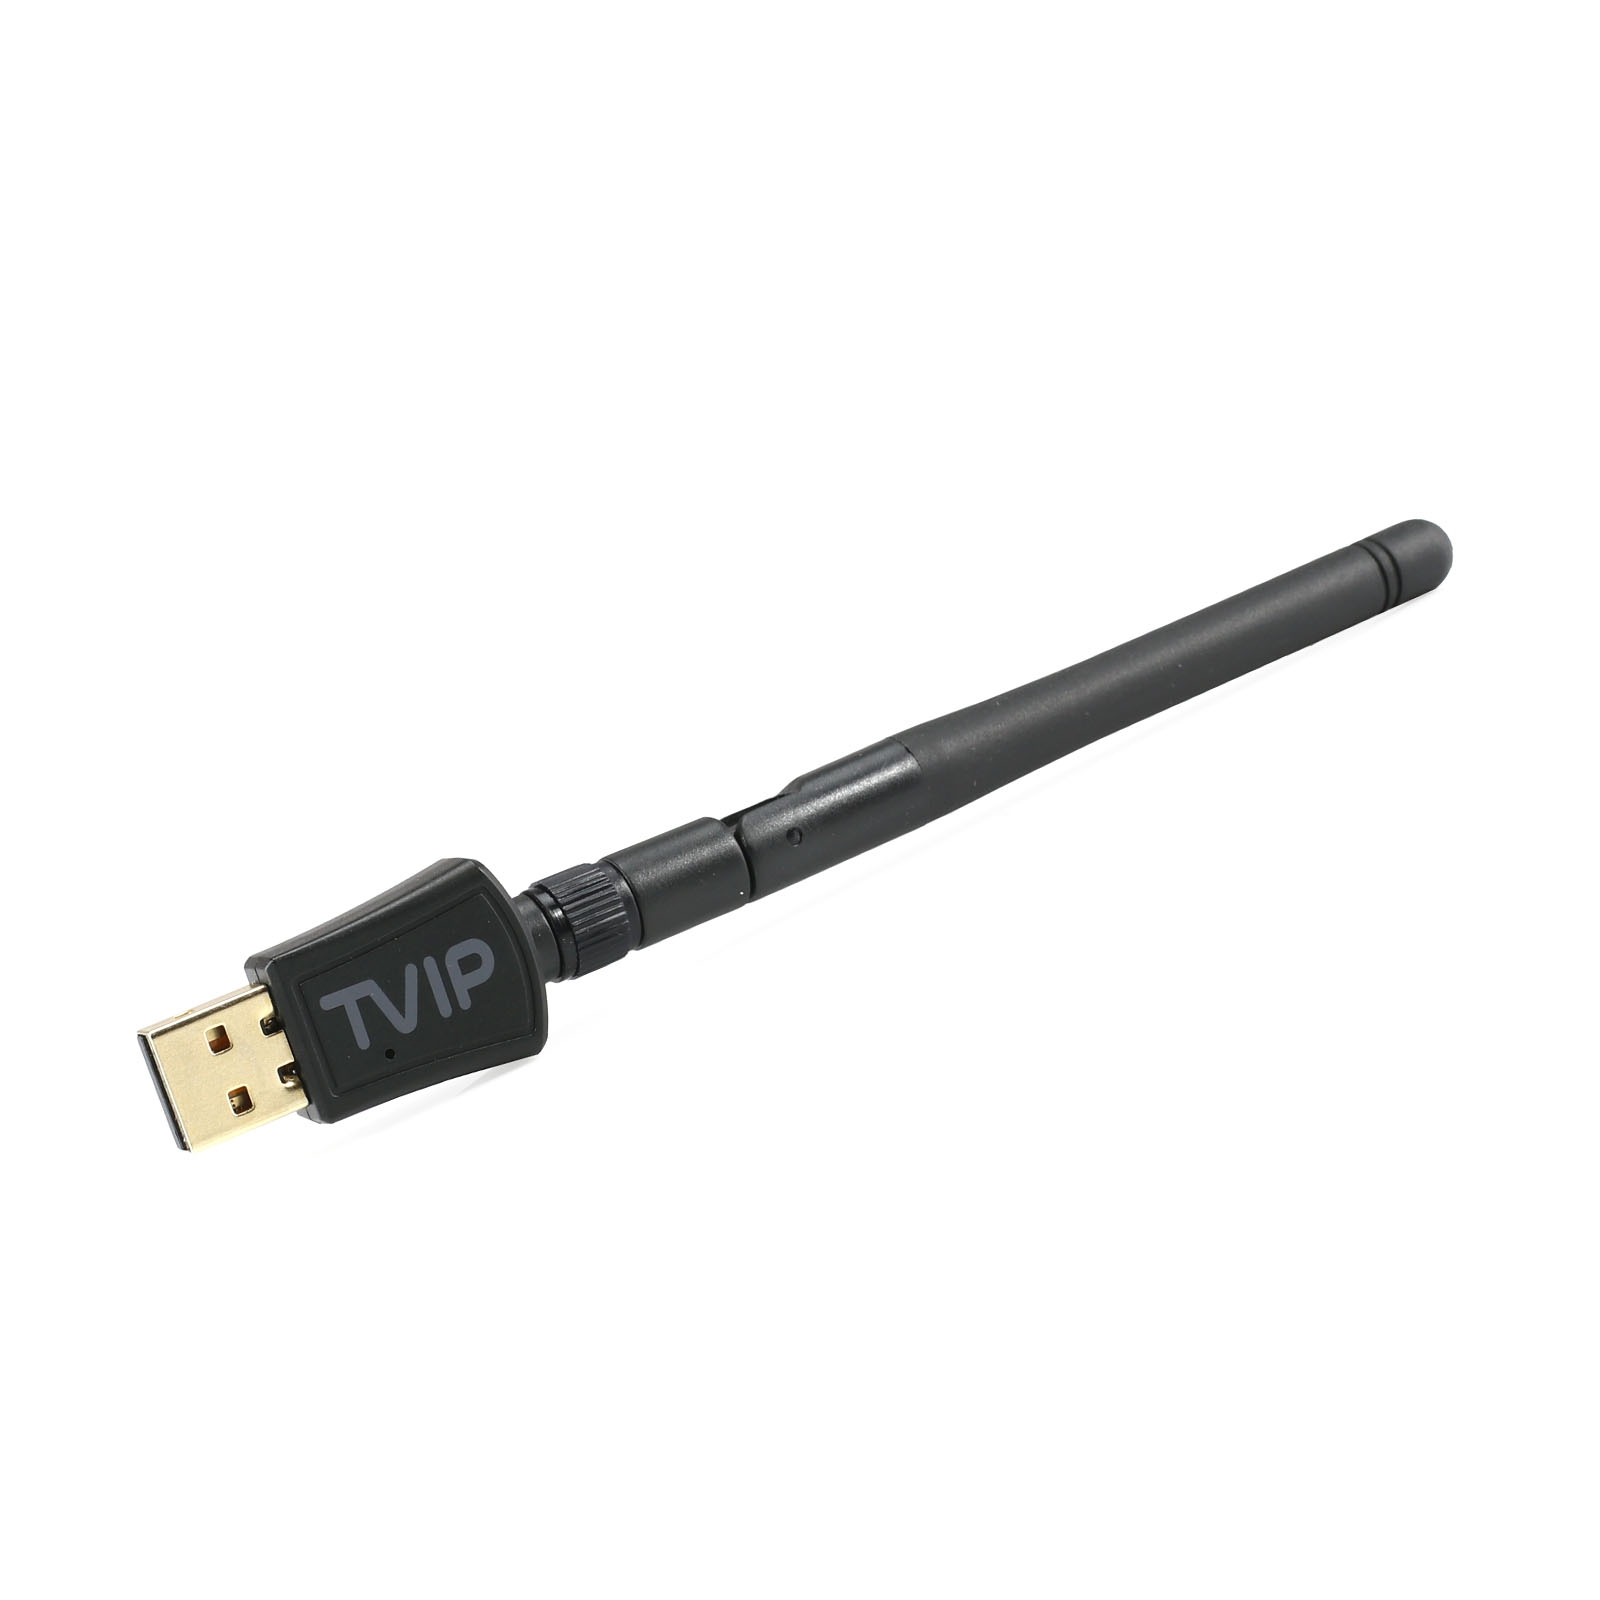 TVIP Wireless USB 2.0 Wlan Stick Adapter 600Mbit 2.4/5 GHz mit Antenne